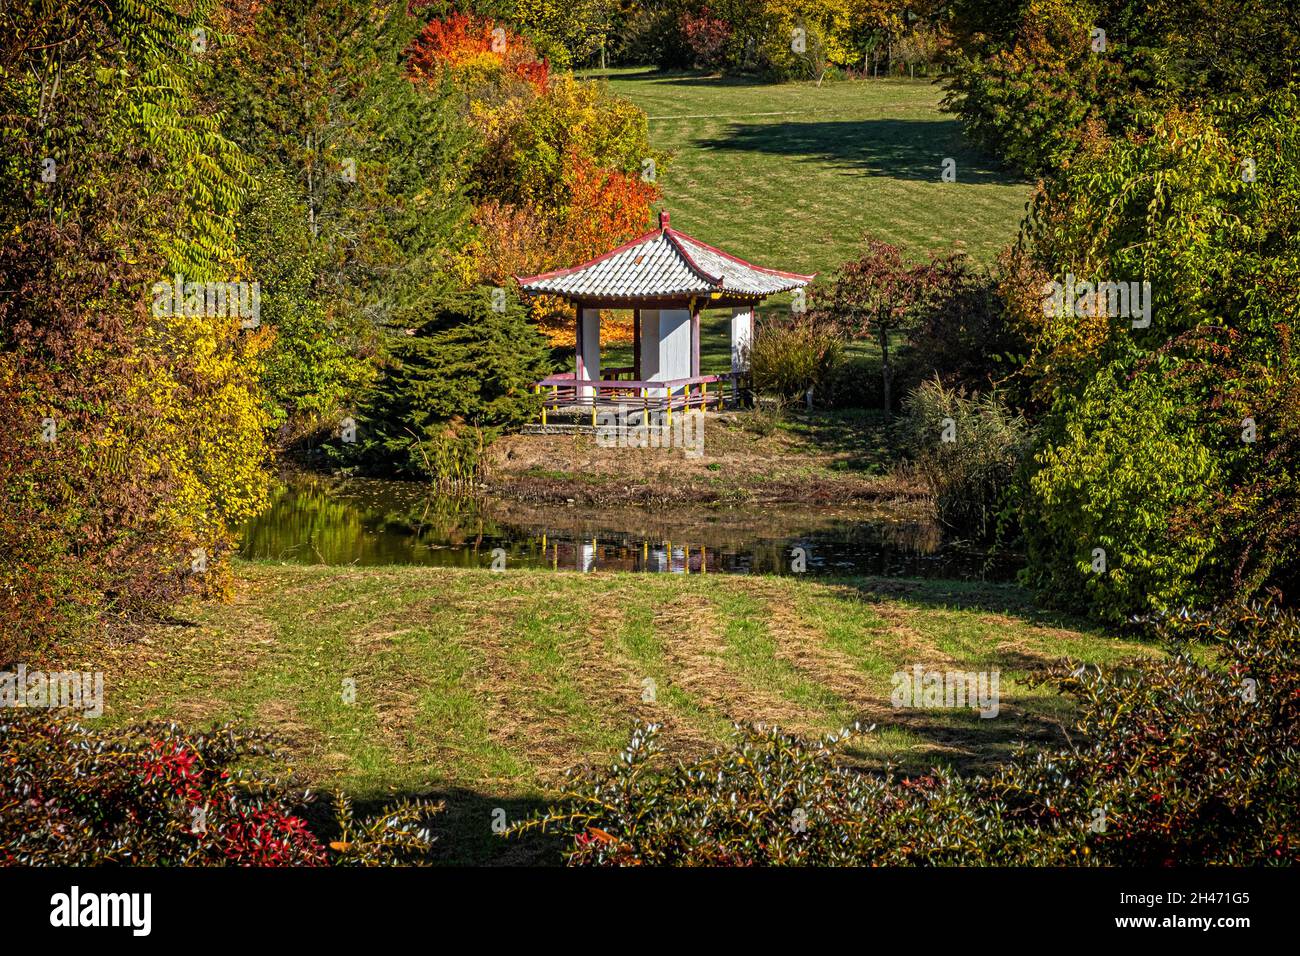 Asian architecture in arboretum Tesarske Mlynany, Slovak republic. Travel destination. Stock Photo